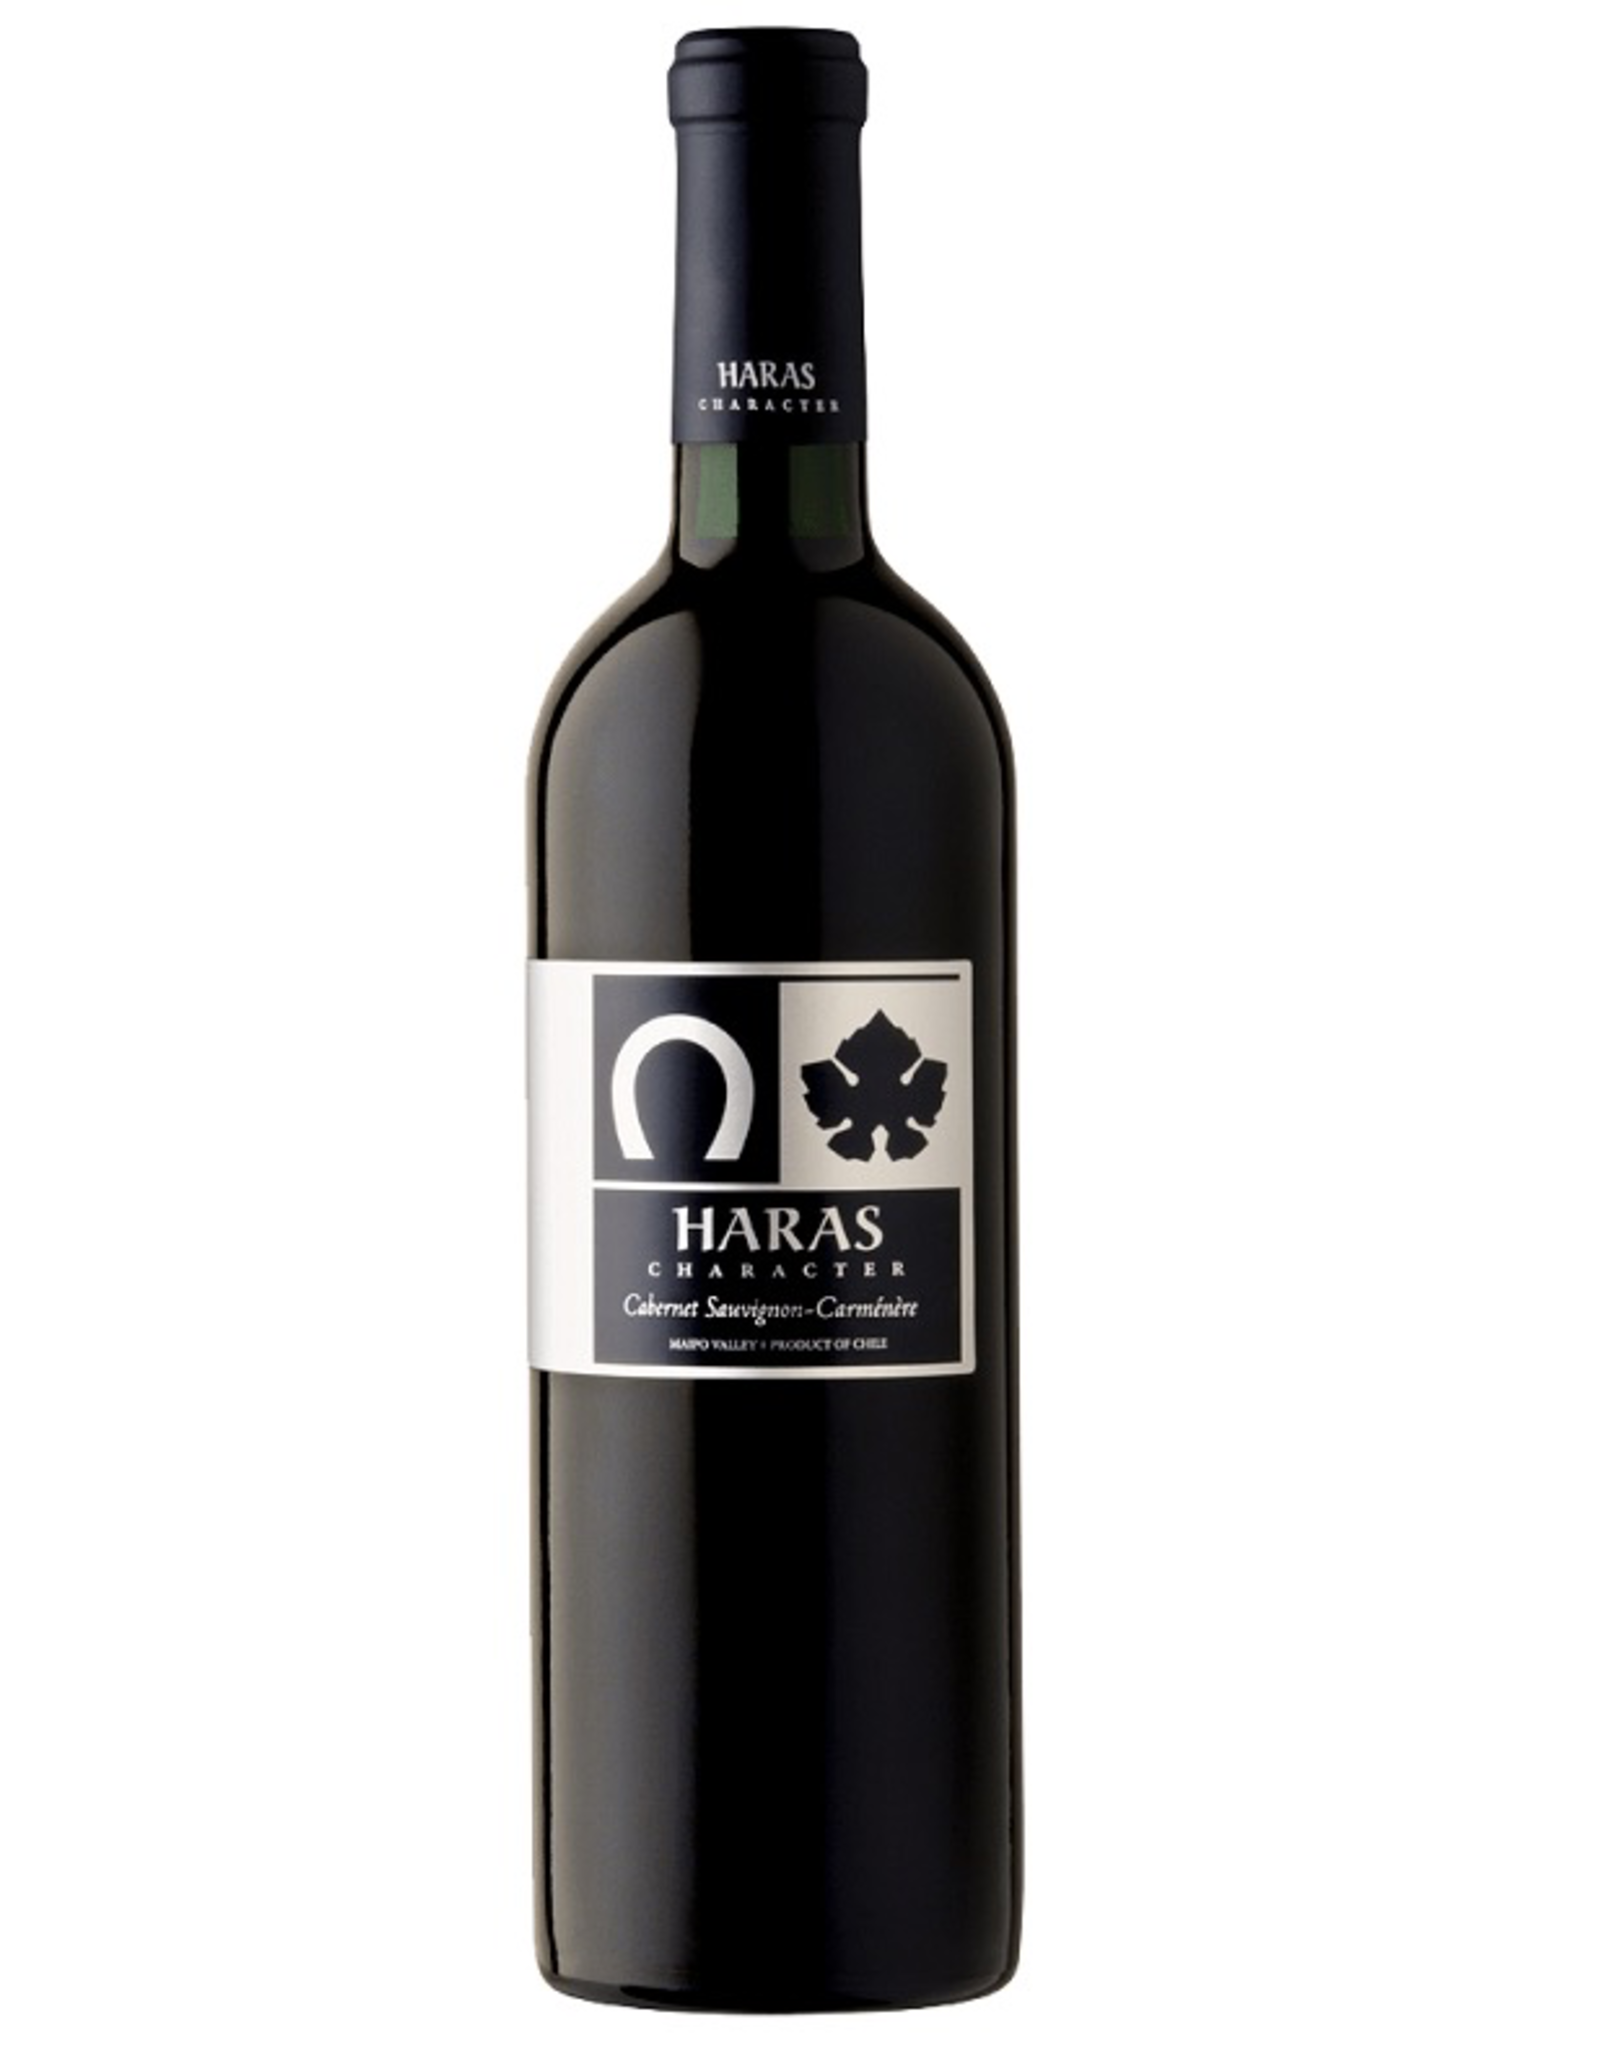 Red Wine 2008, HARAS Character, Cabernet Sauvignon Carminere Blend, Prique, Maipo Valley, Chile, 14.8% Alc, CTnr, TW92